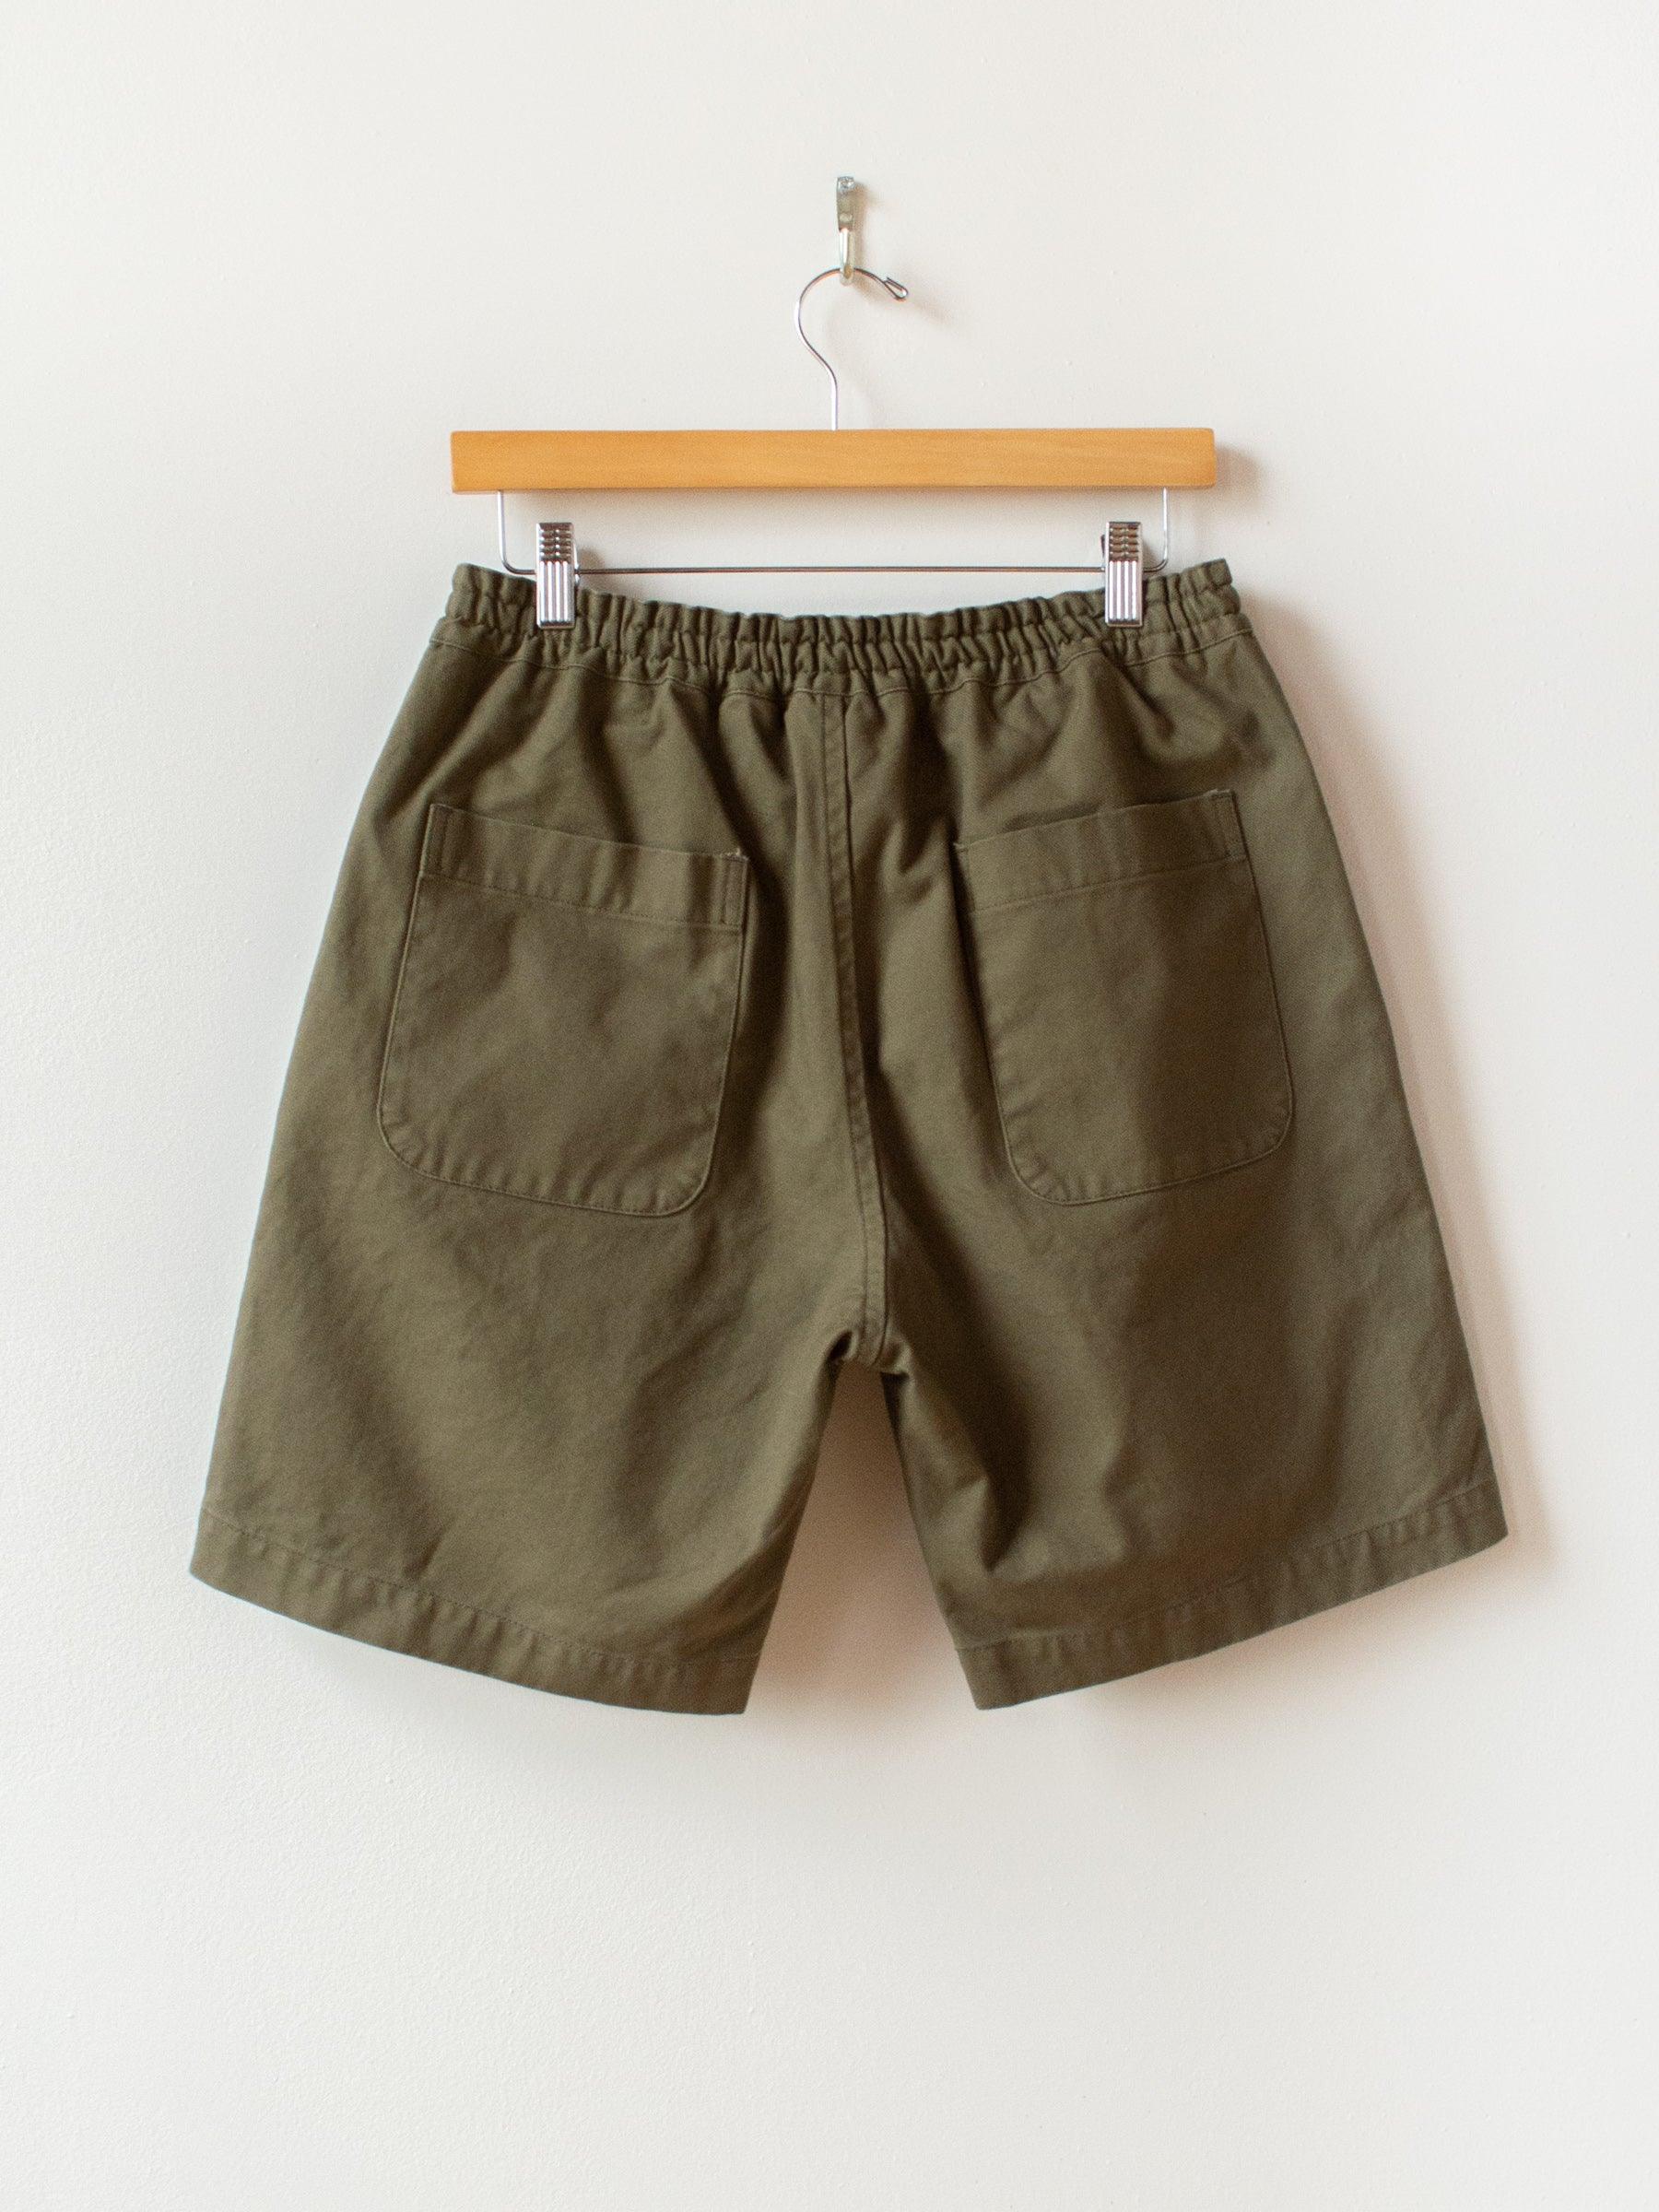 Namu Shop - Fujito Line Easy Shorts - Olive